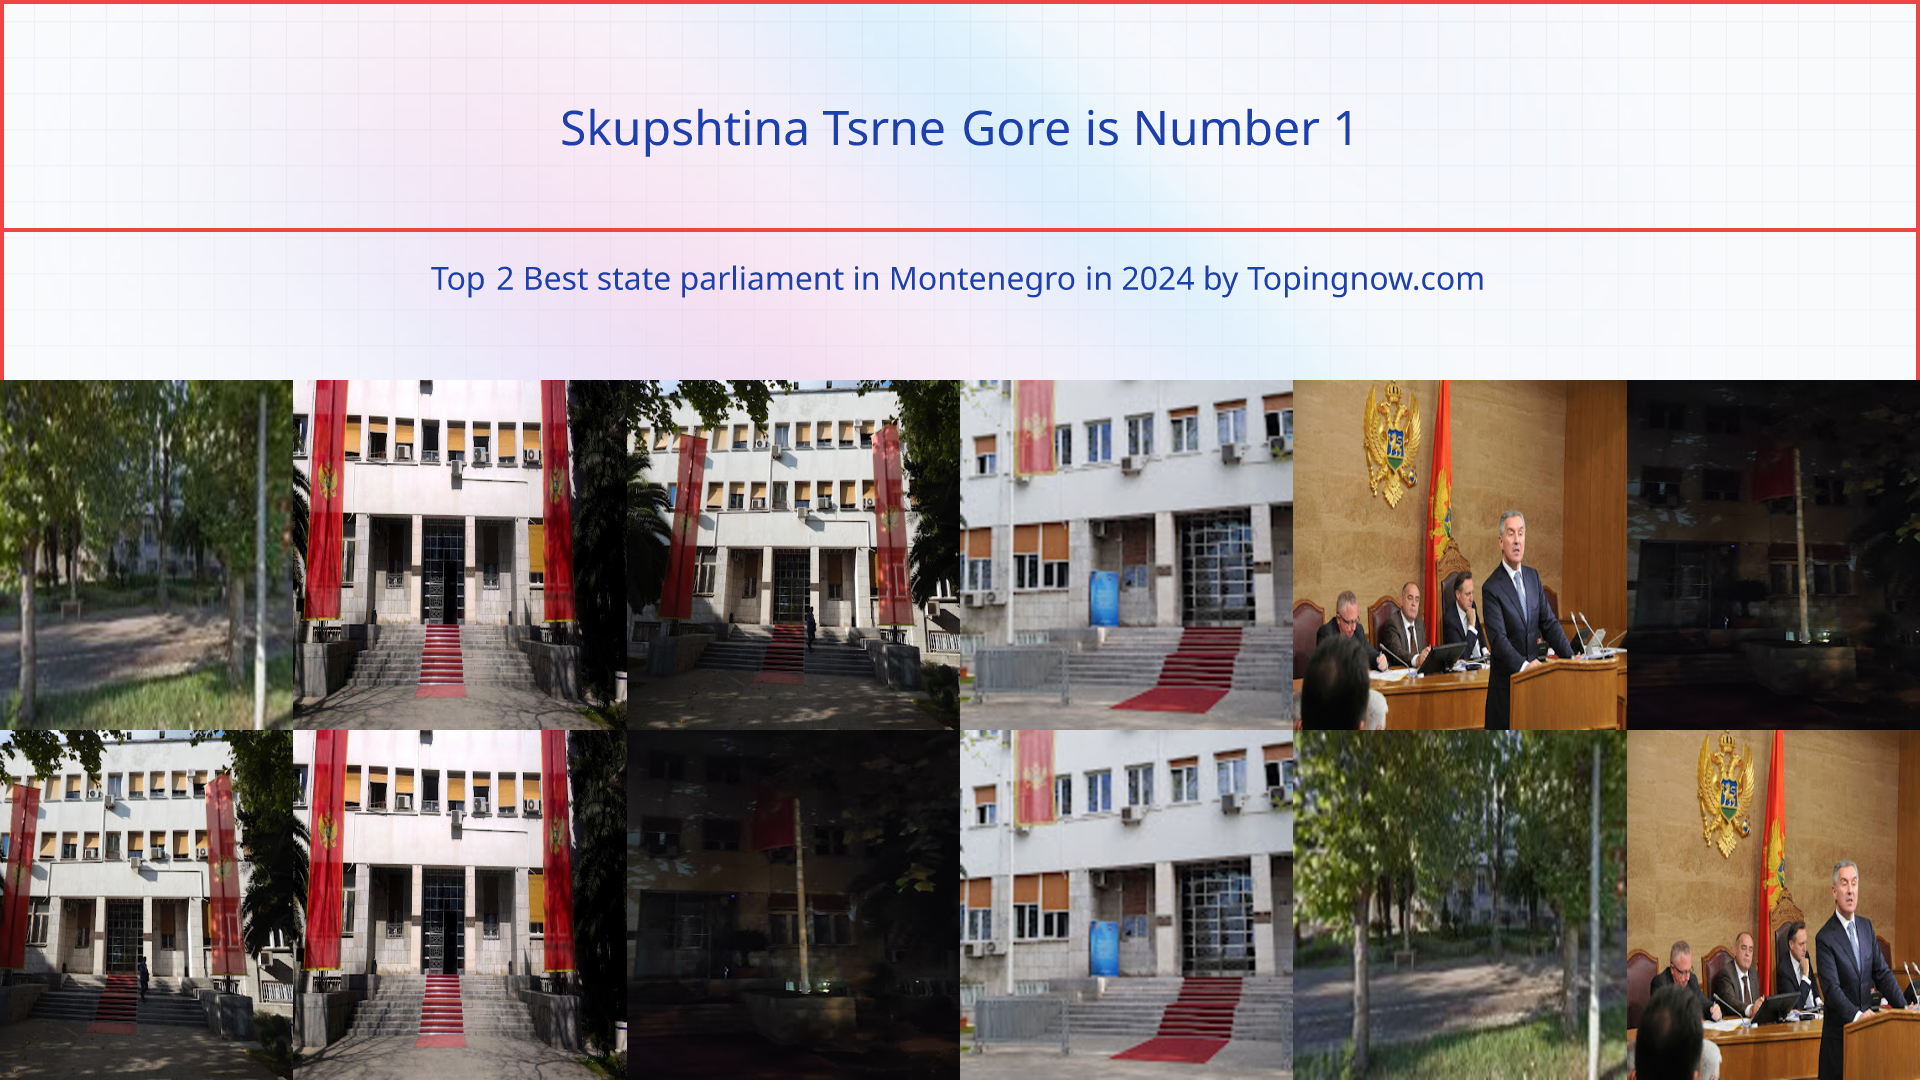 Skupshtina Tsrne Gore: Top 2 Best state parliament in Montenegro in 2024